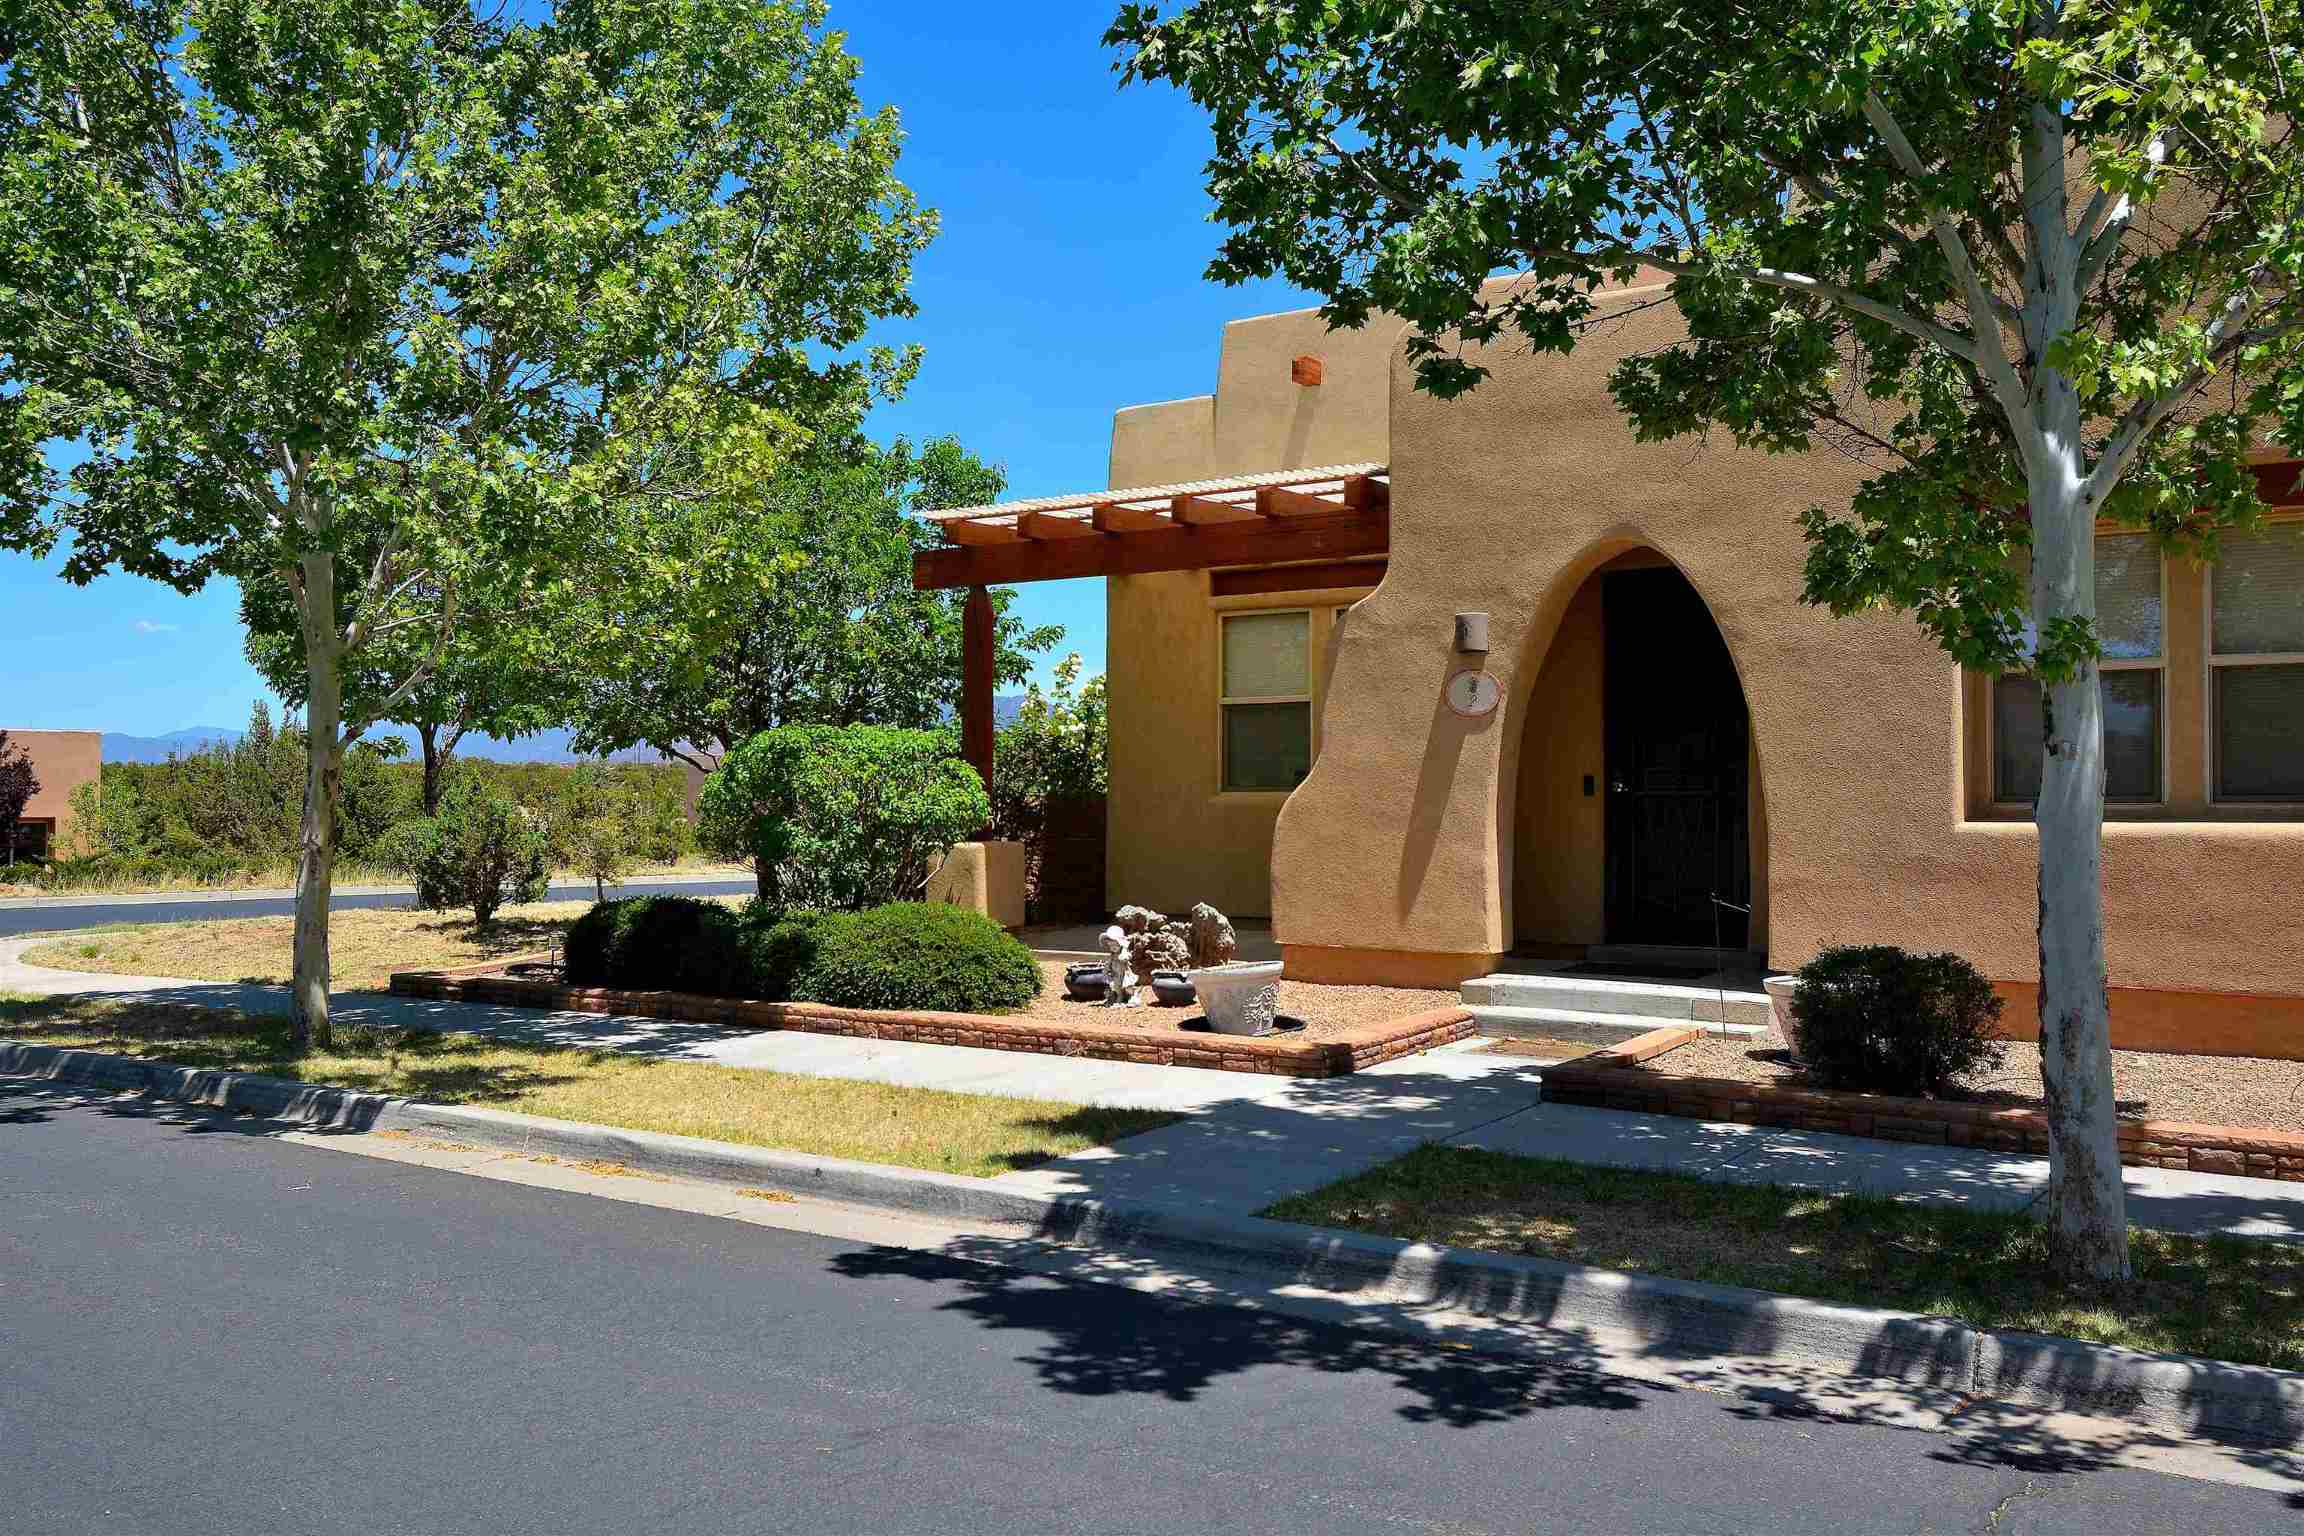 2 SHIPROCK PEAK, Santa Fe, New Mexico 87508, 3 Bedrooms Bedrooms, ,2 BathroomsBathrooms,Residential,For Sale,2 SHIPROCK PEAK,202201765